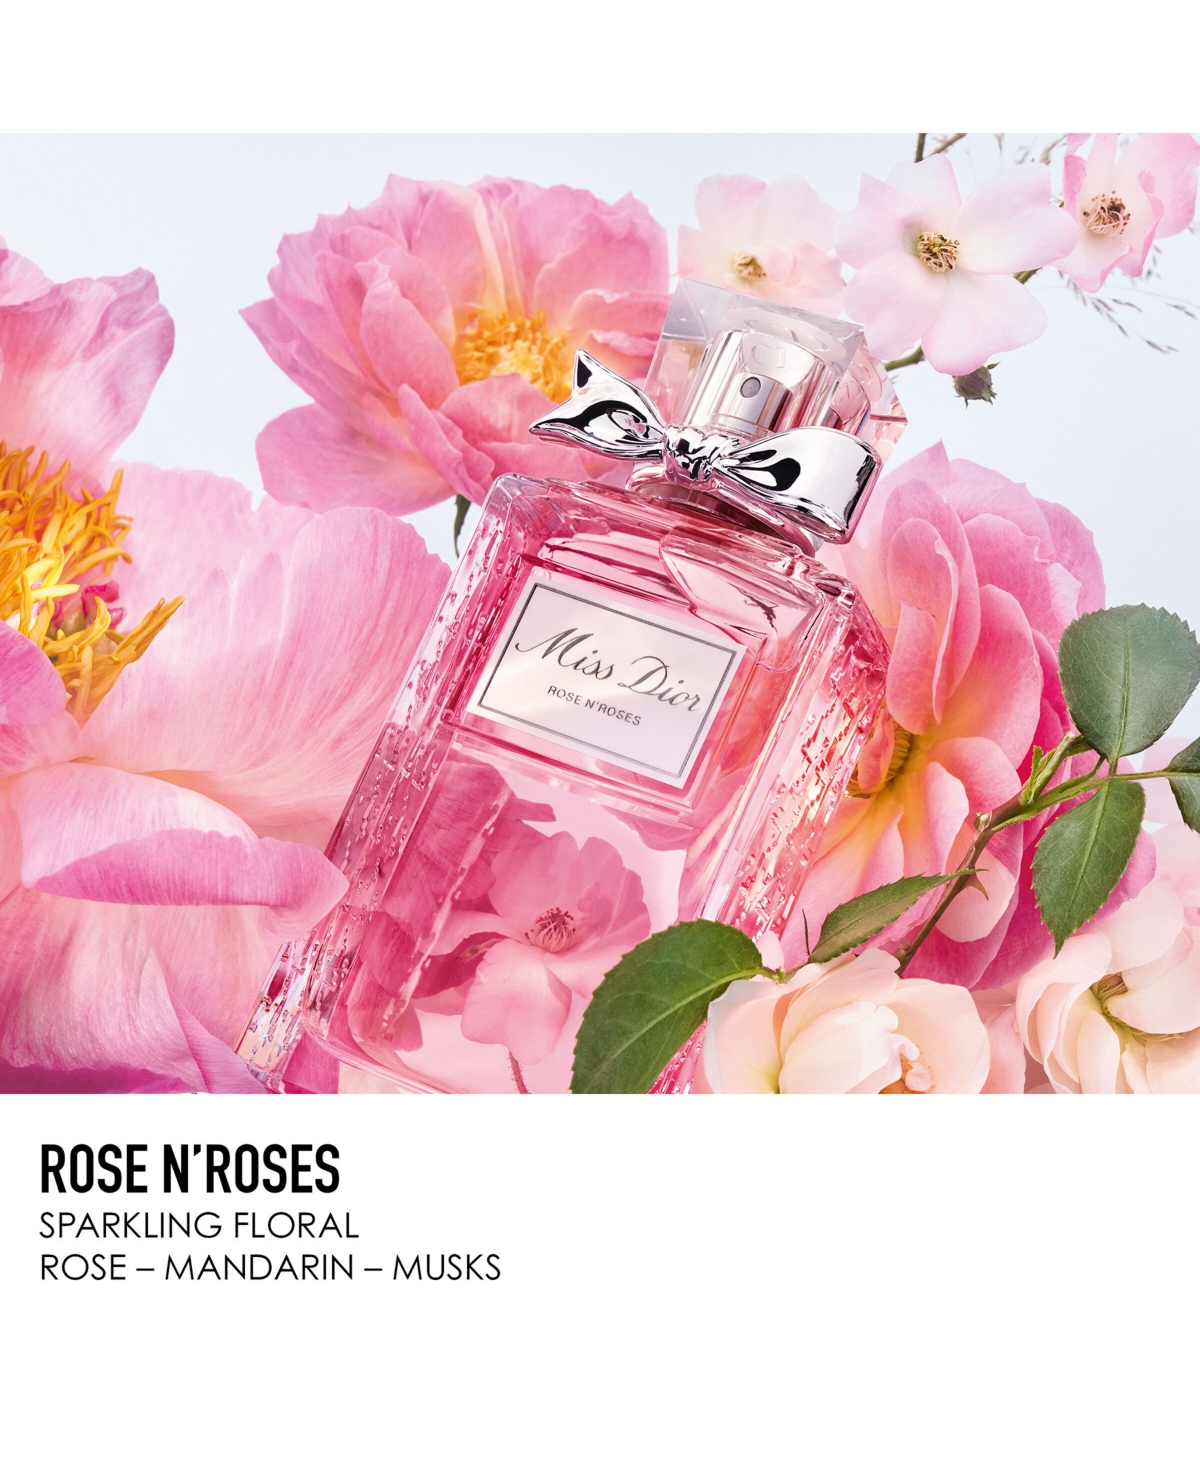 Shop Dior Miss  Rose N'roses Eau De Toilette Spray, 3.4-oz. In No Color